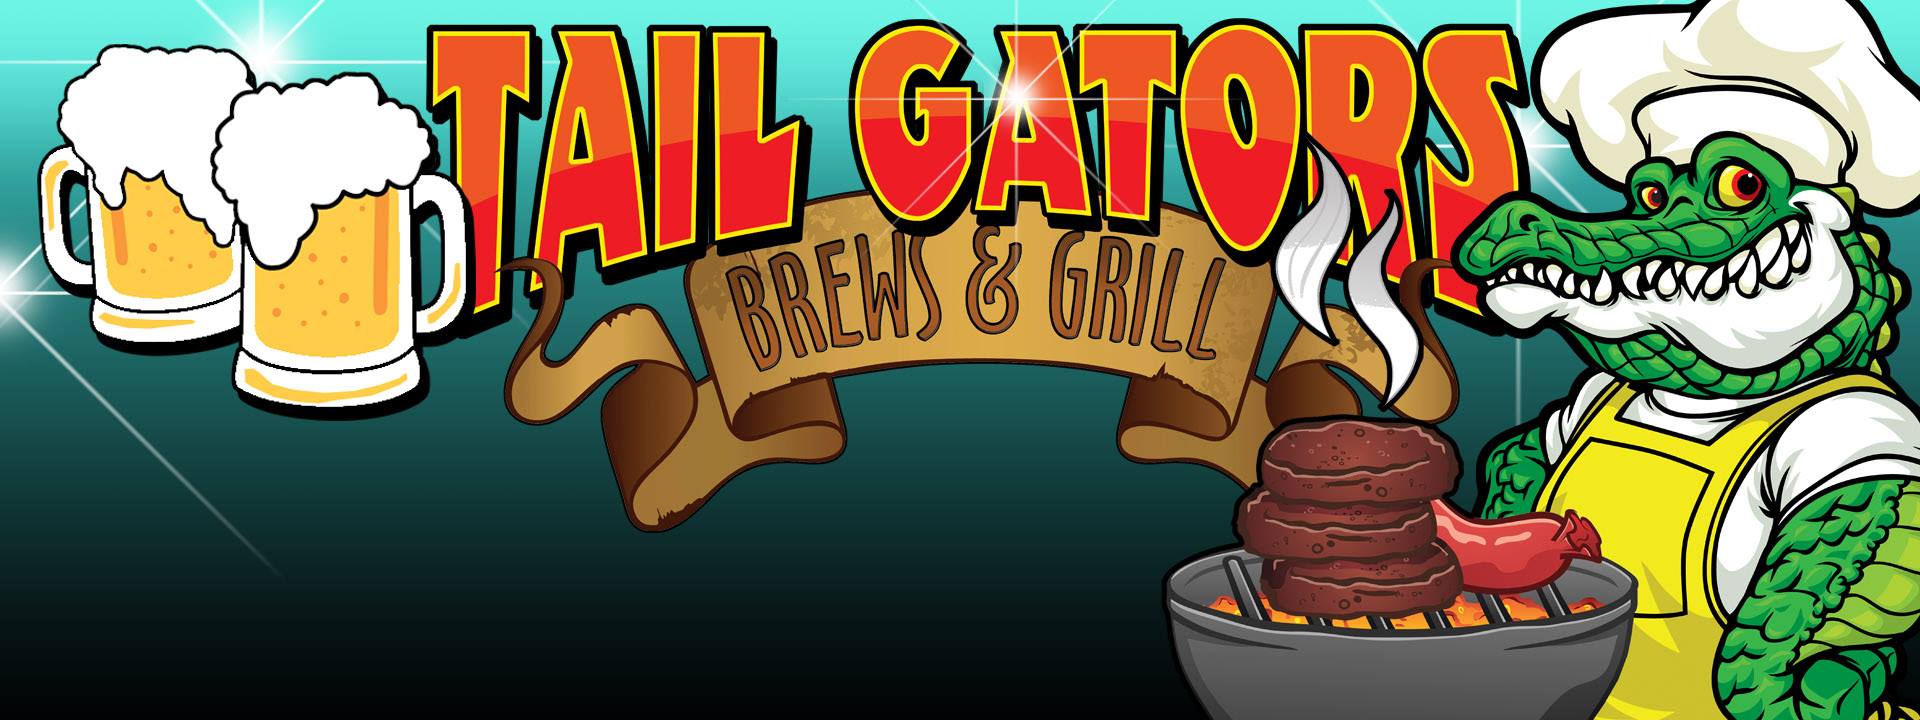 Tail-Gators Brews & Grill Home